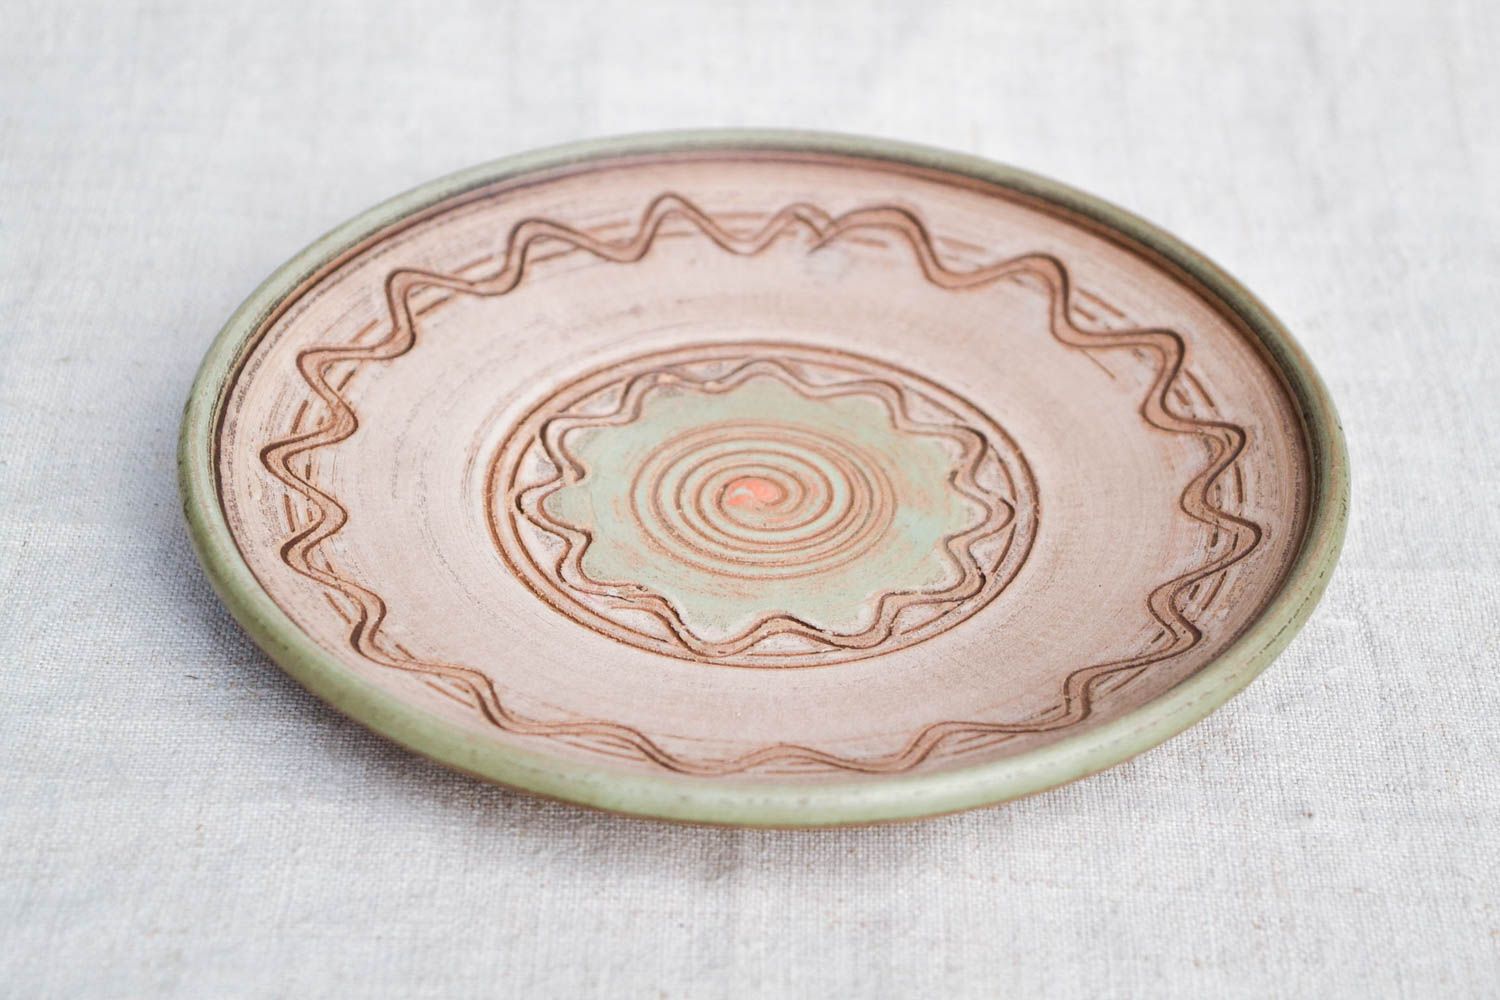 Handmade plate designer plate gift ideas unusual gift kitchen decor clay plate photo 4